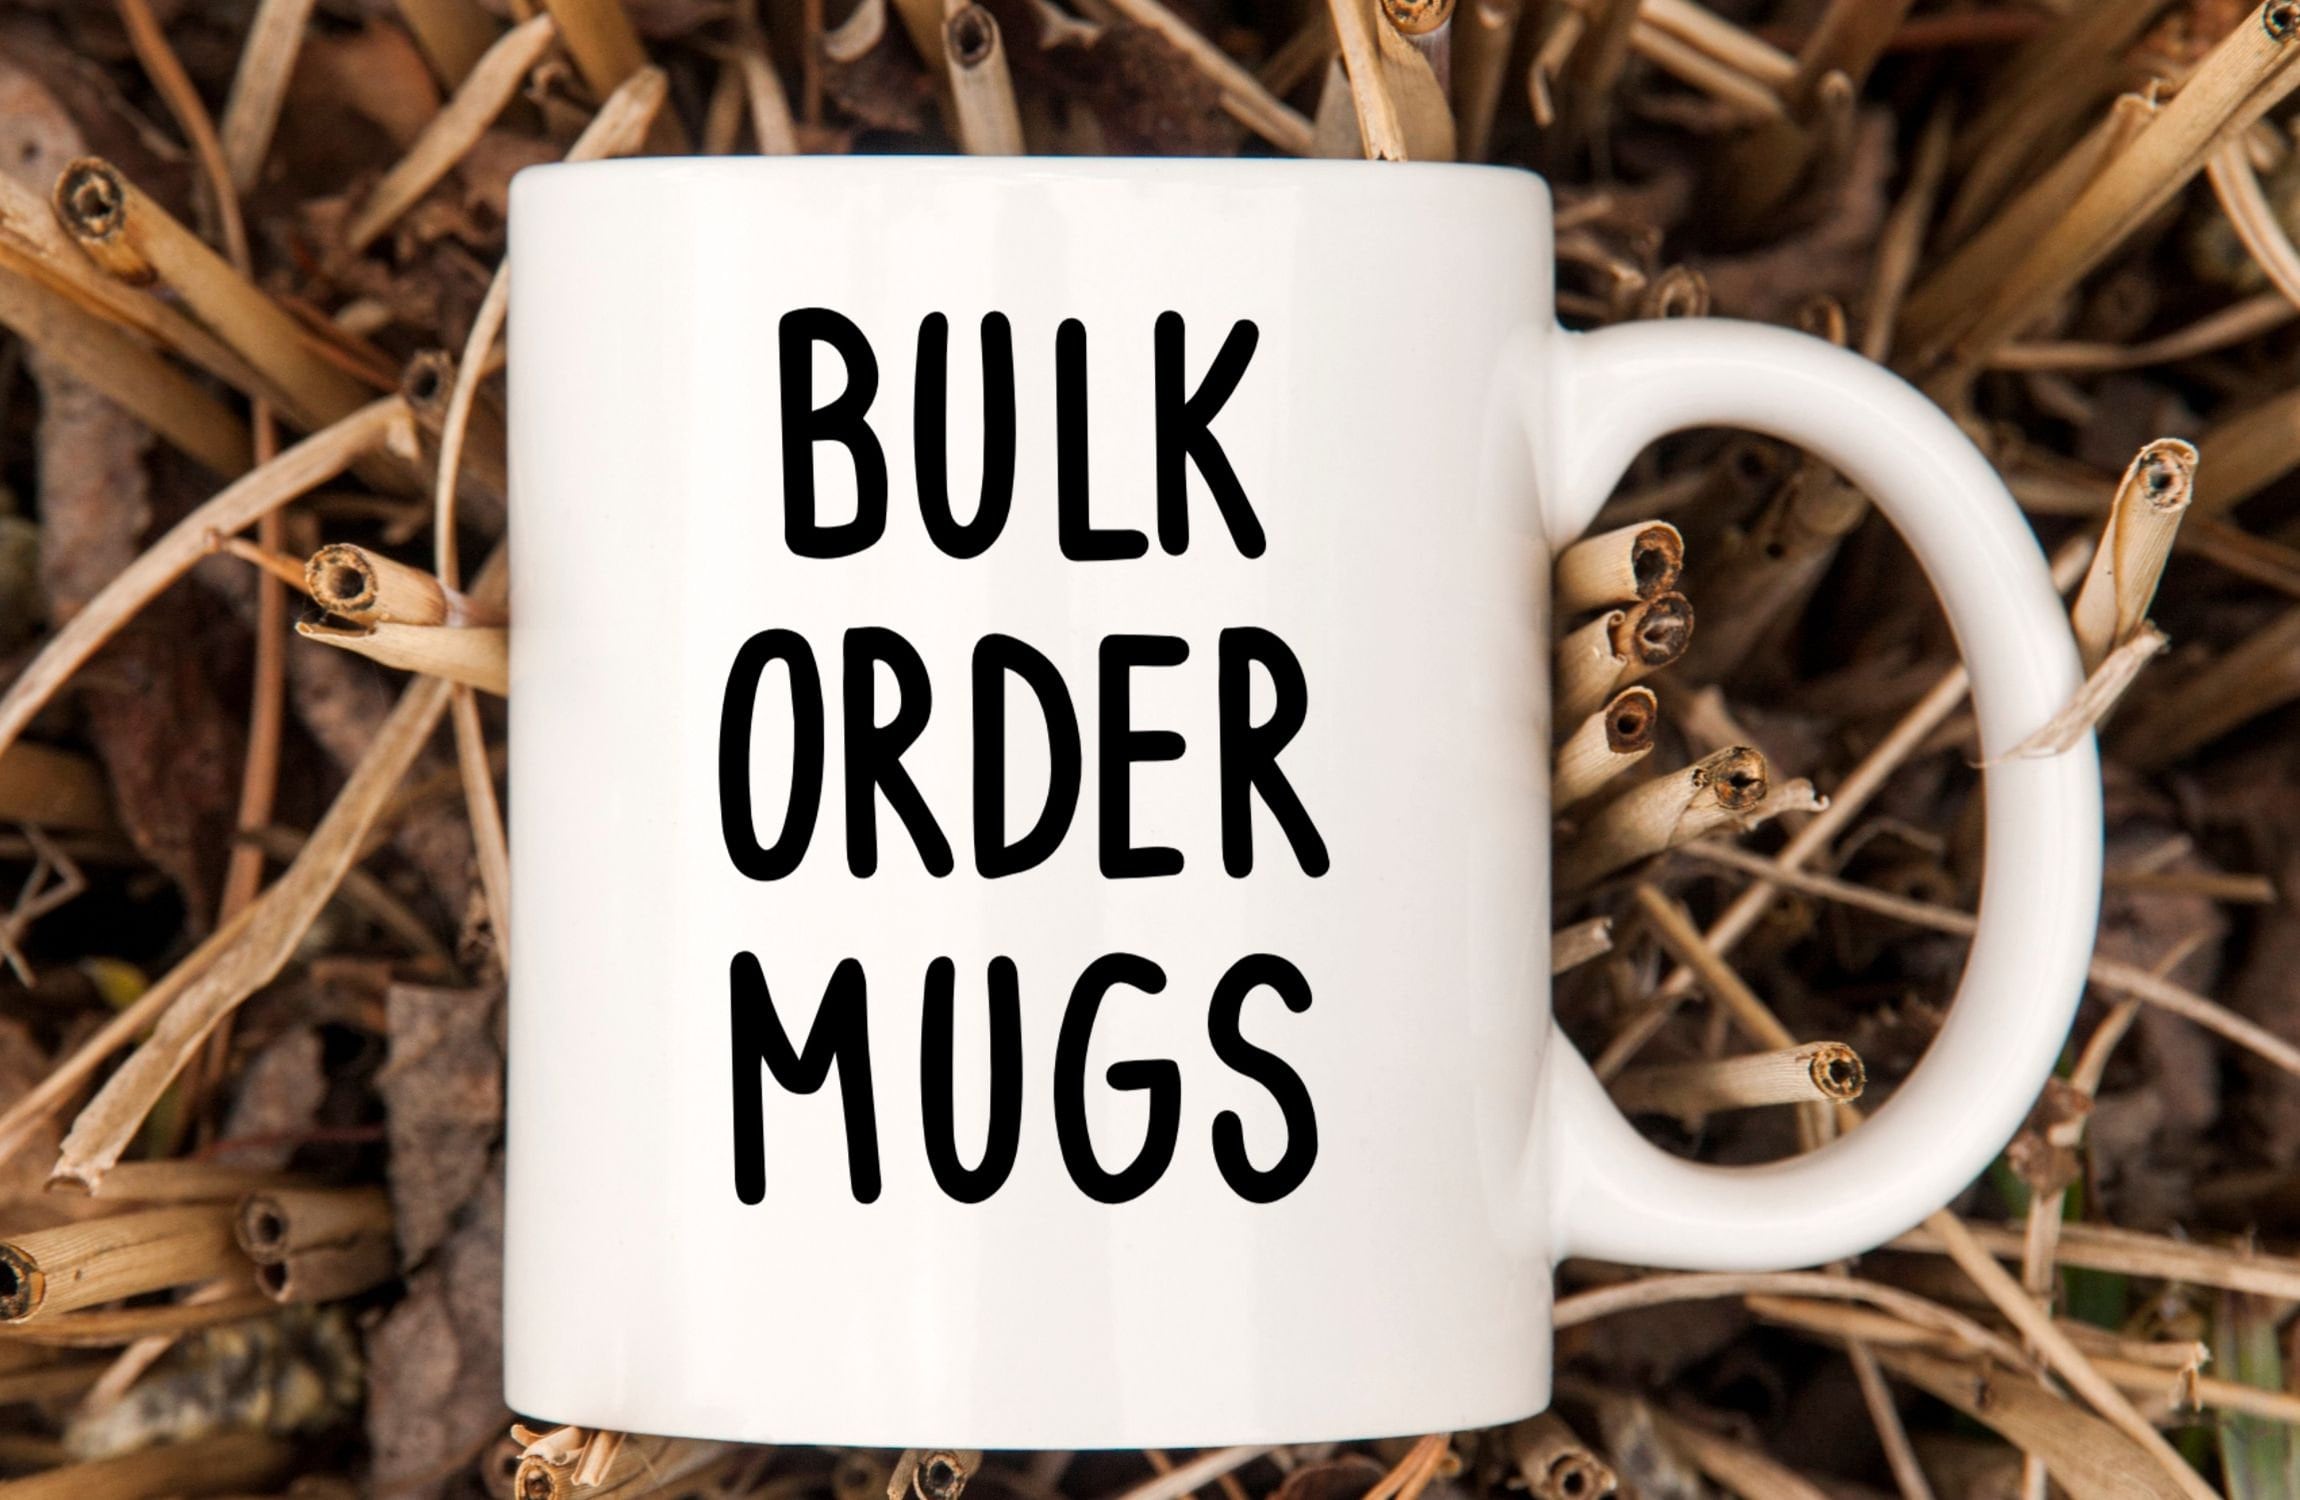 Wholesale Mugs  Bulk Mugs from CDI